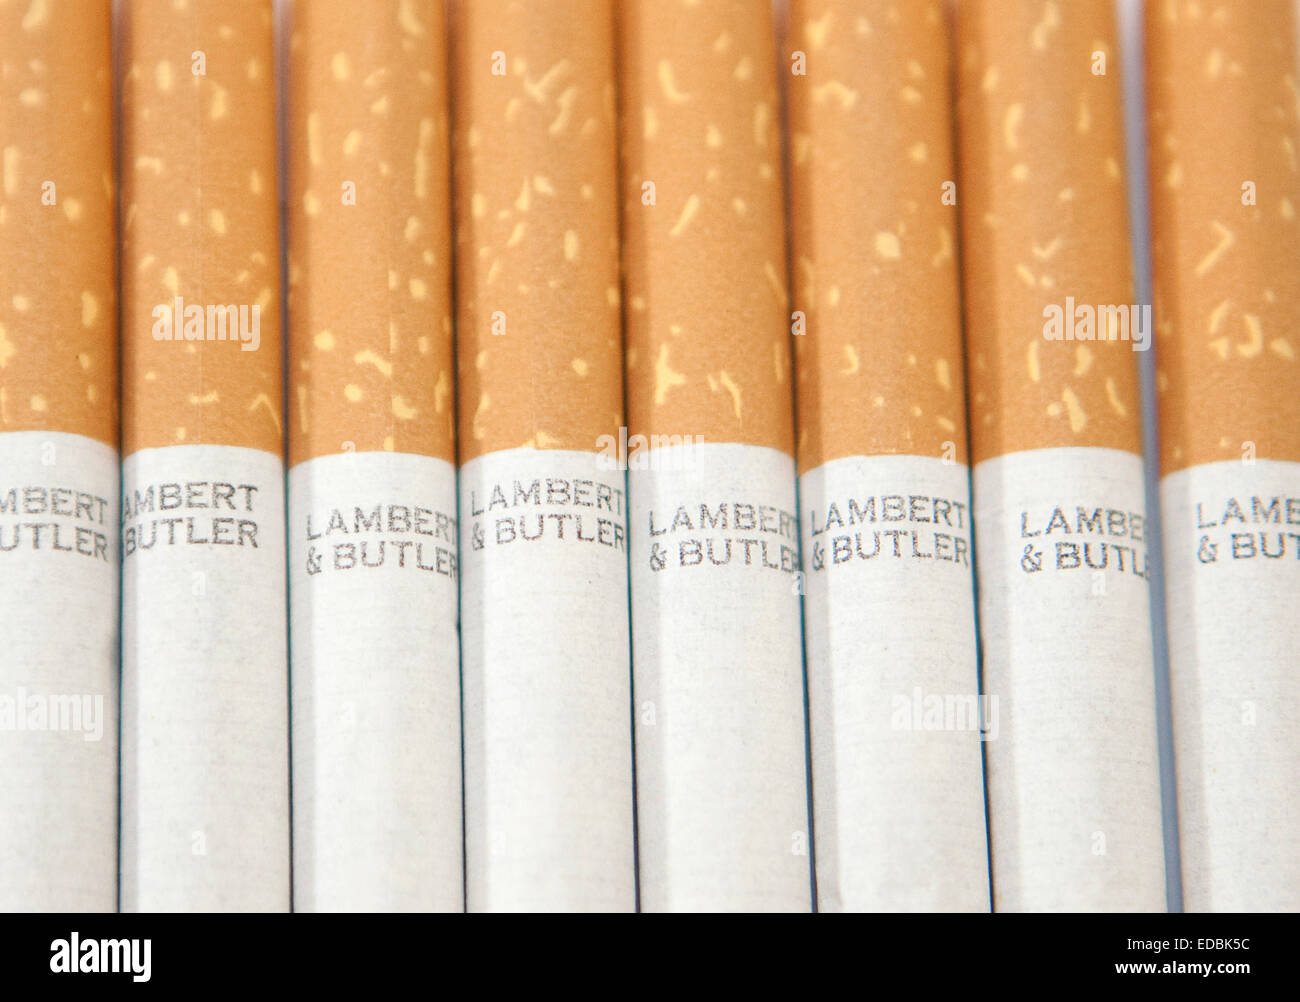 Imperial Tobacco celebrates 100 years of Lambert & Butler